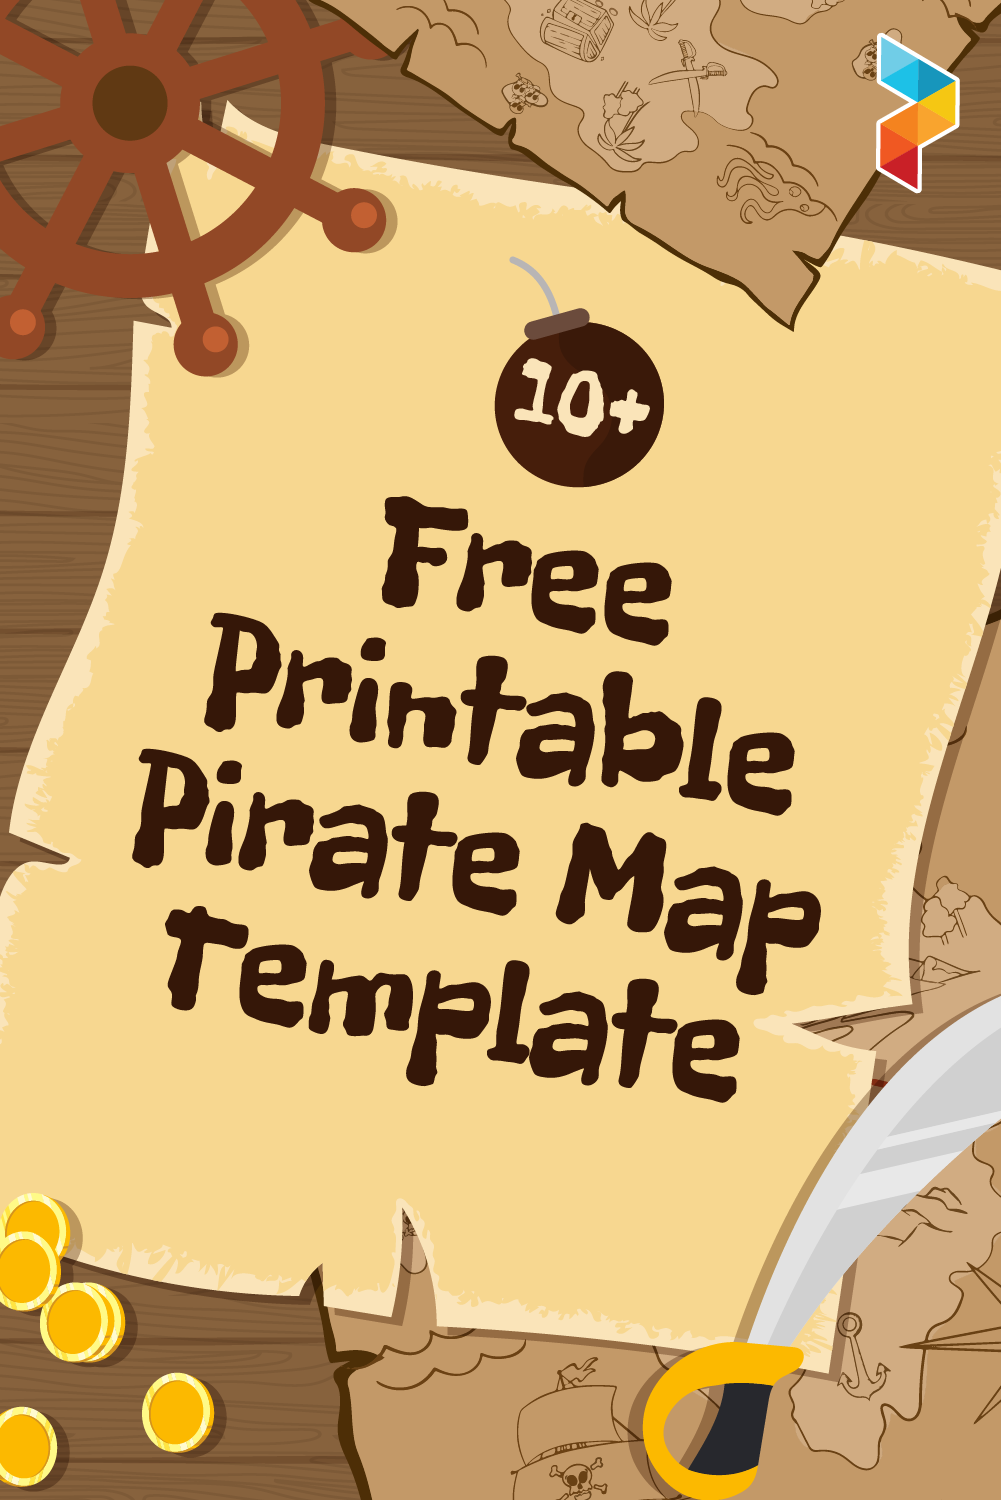 Pirate Map Template